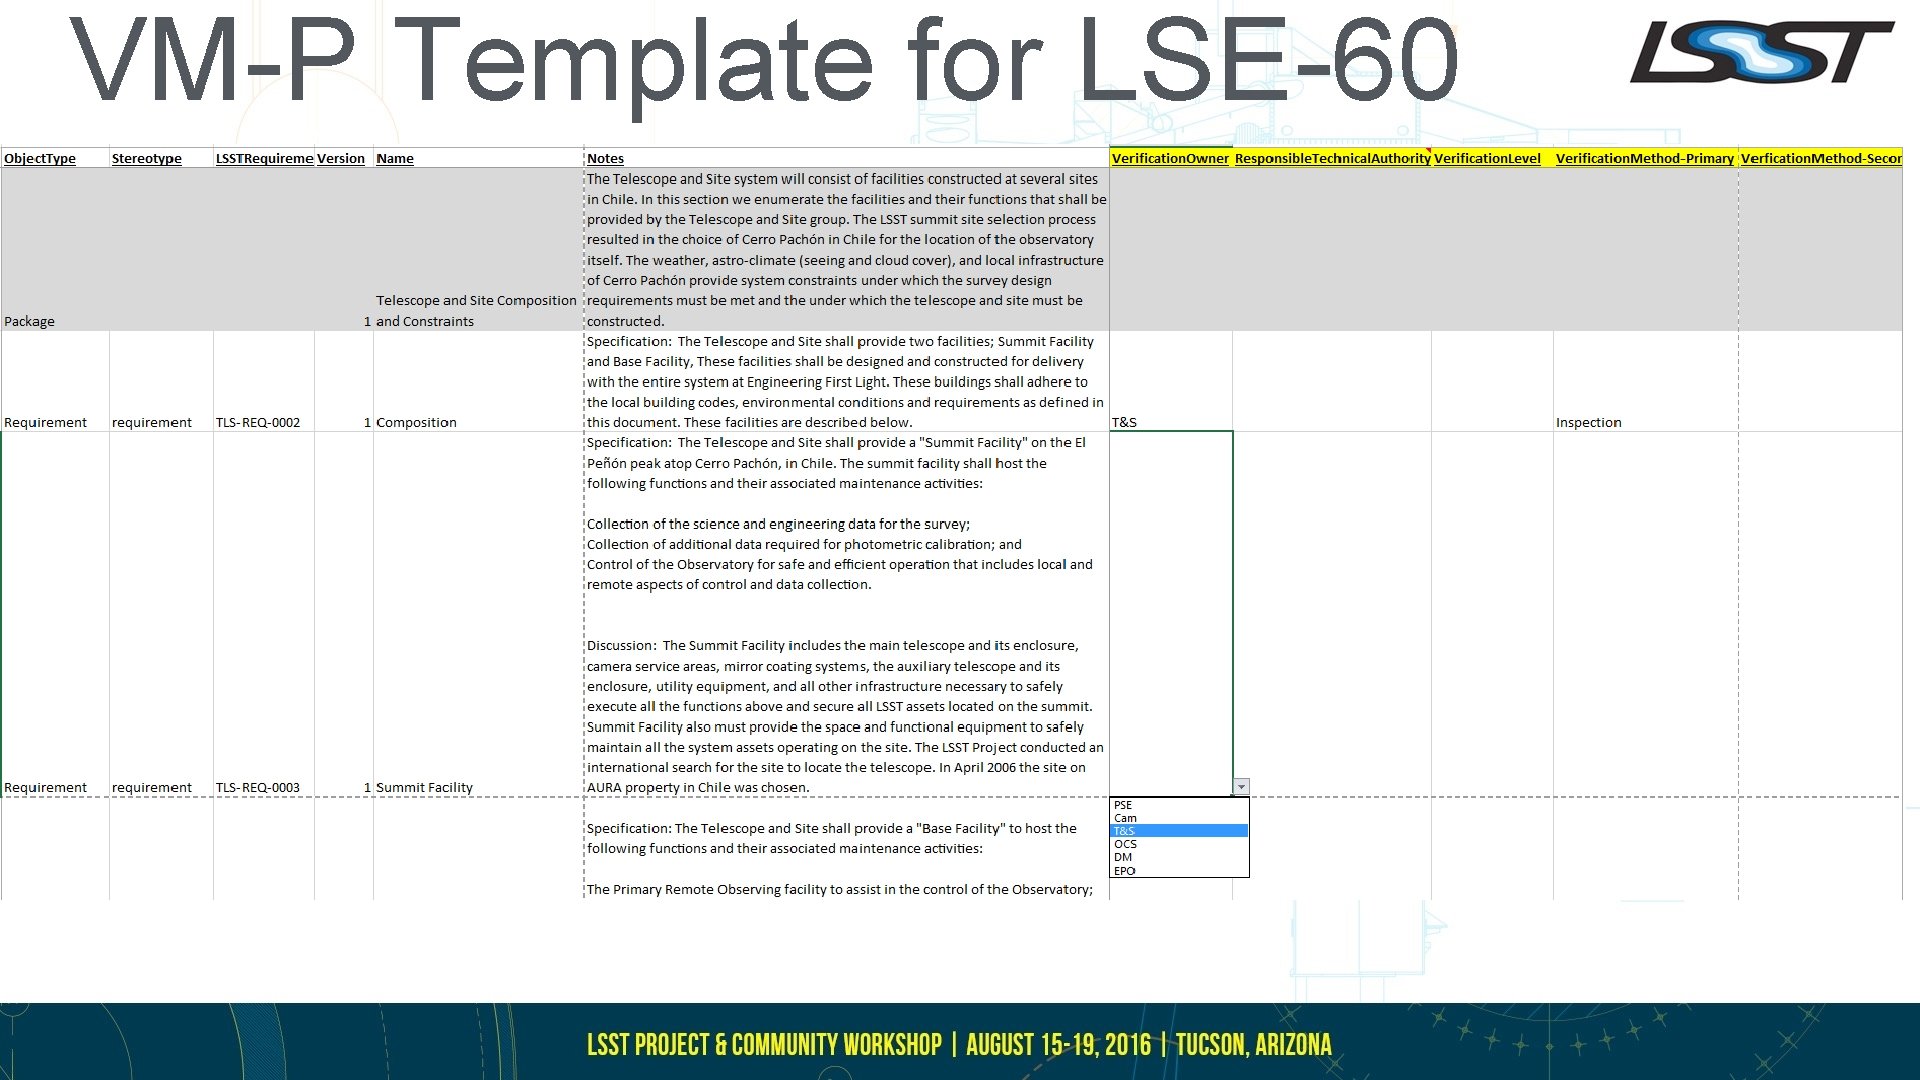 VM-P Template for LSE-60 